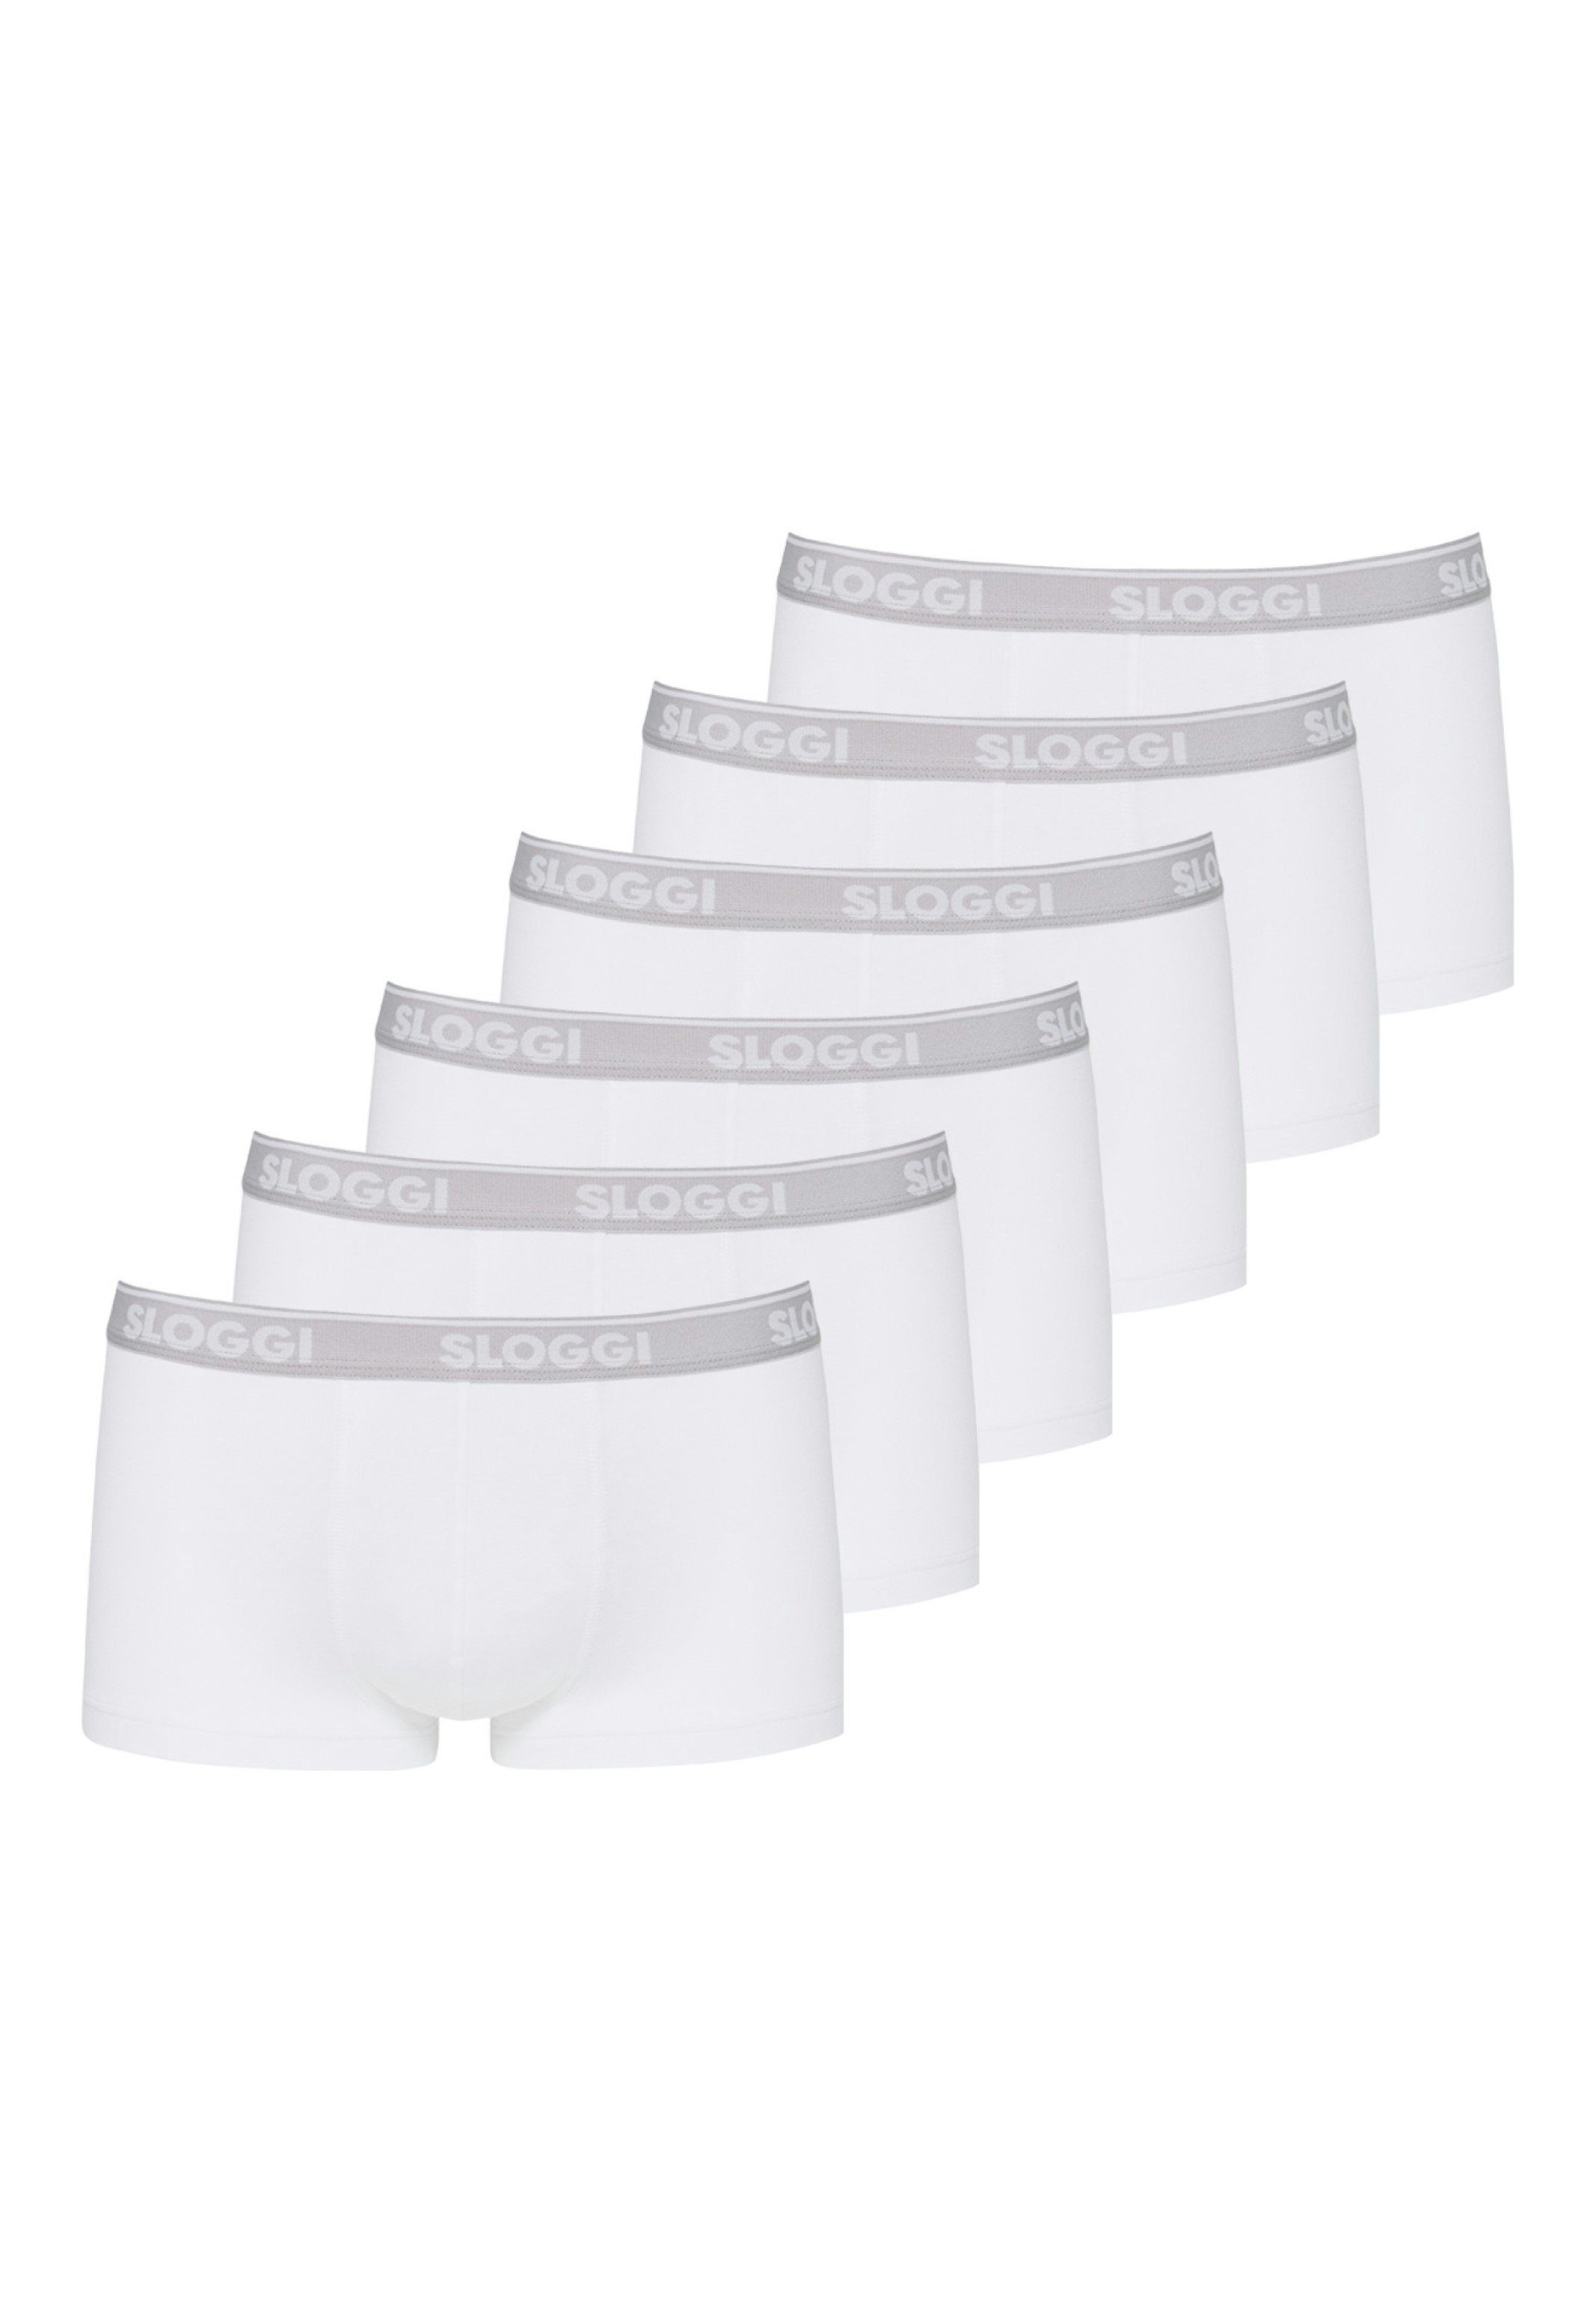 Sloggi Retro Boxer 6er Passform Perfekte Weiß 6-St) - Baumwolle Pack Hipster Go Ohne - (Spar-Set, / ABC - Eingriff Pant